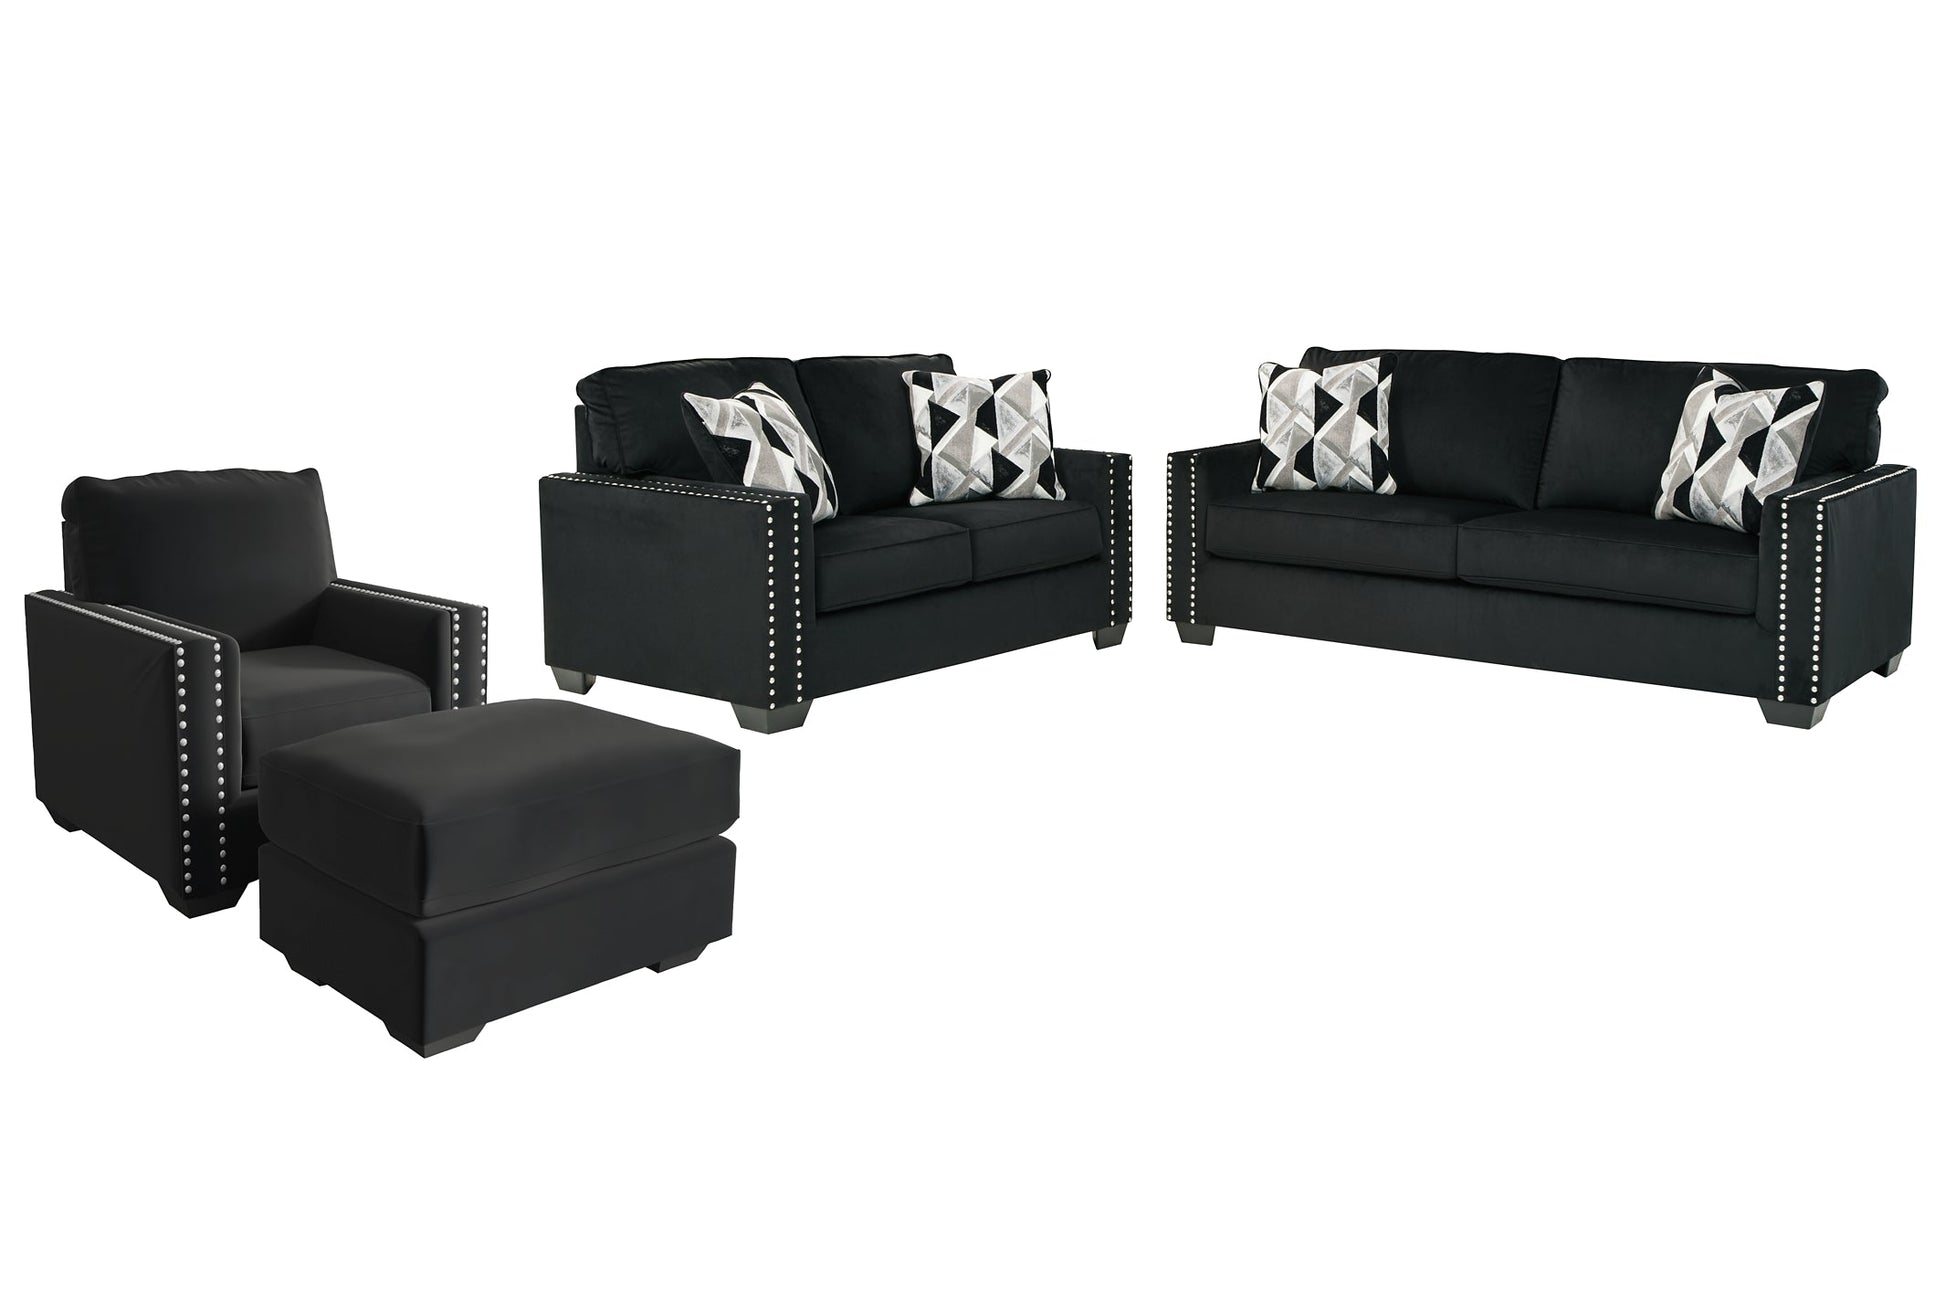 Gleston Sofa, Loveseat, Chair and Ottoman at Cloud 9 Mattress & Furniture furniture, home furnishing, home decor